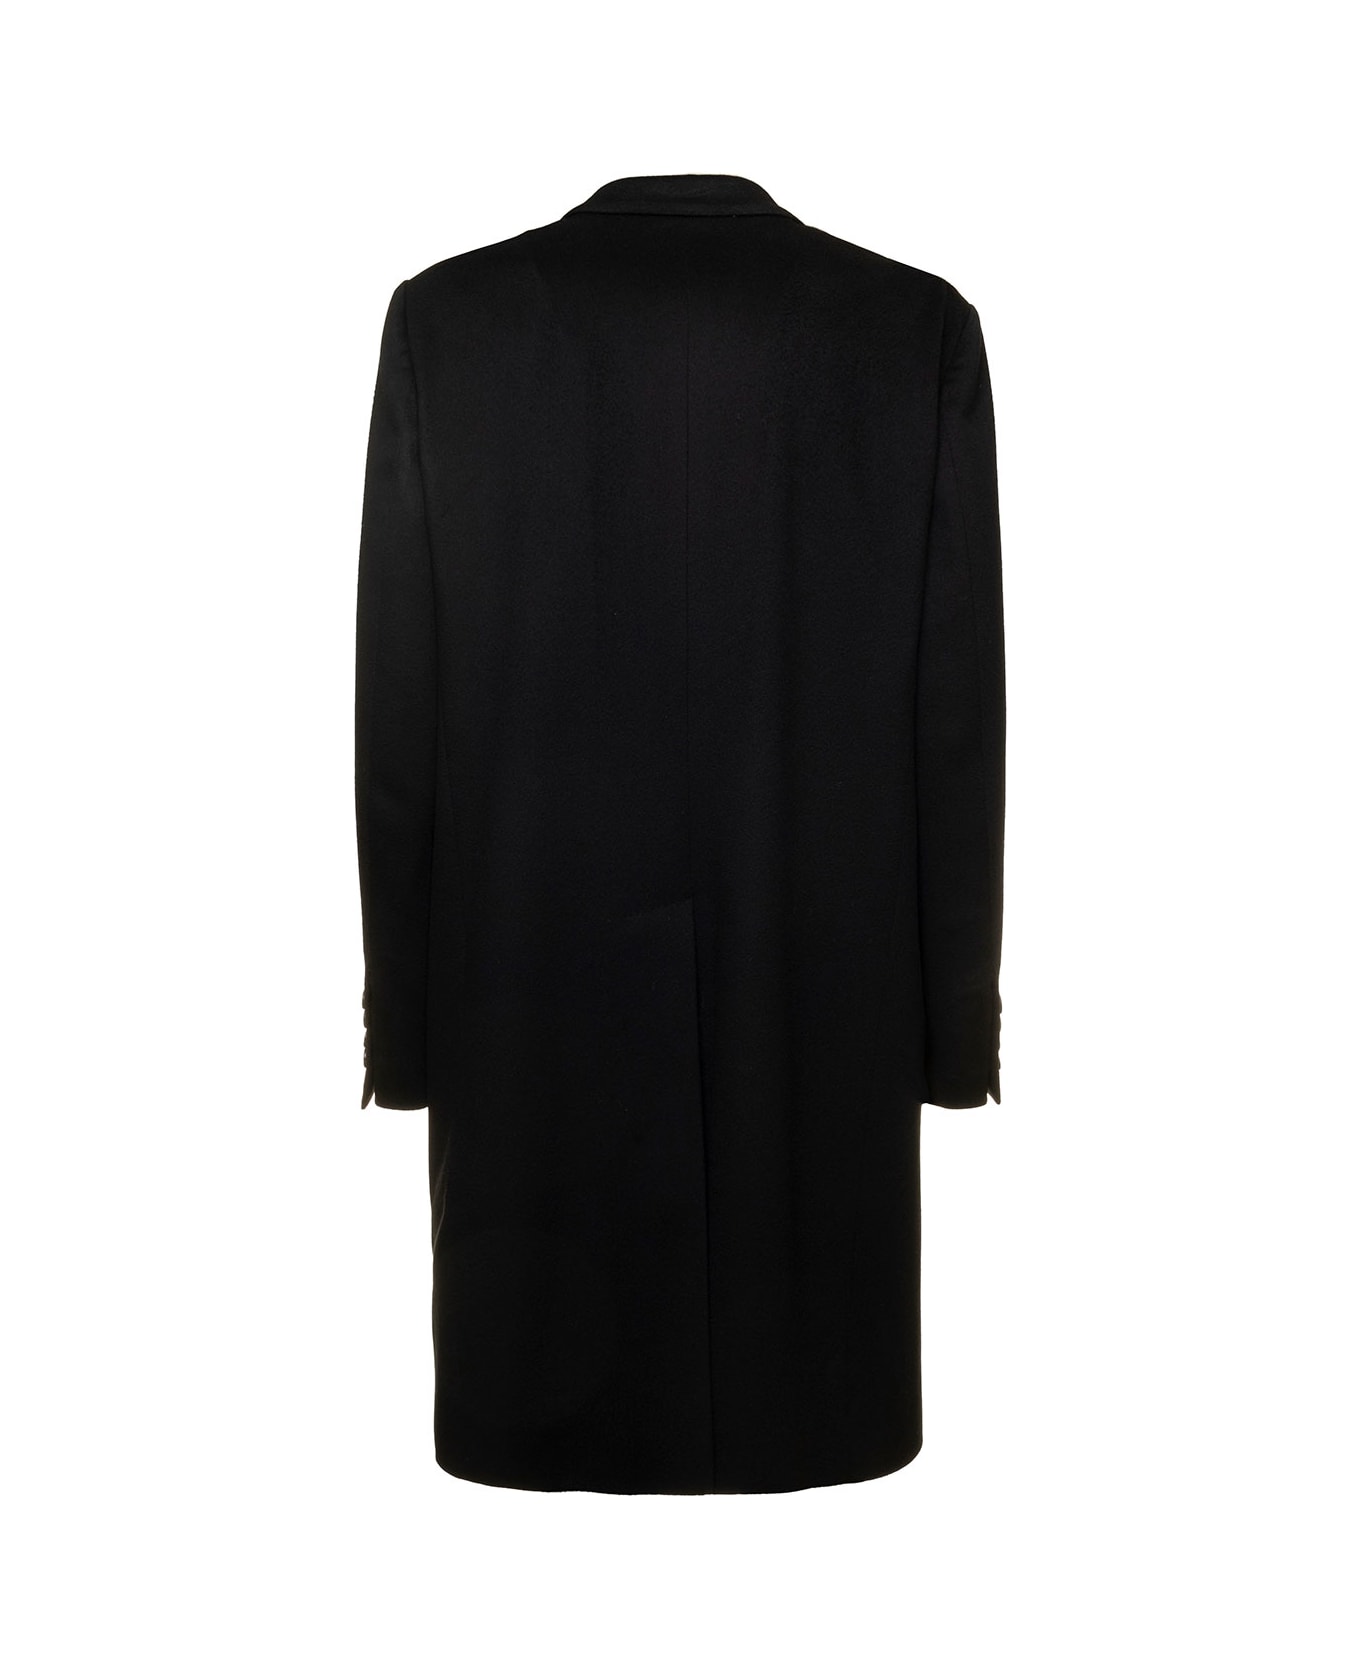 Dolce bag & Gabbana Black Single-breasted Coat In Wool Man Dolce bag & Gabbana - Black